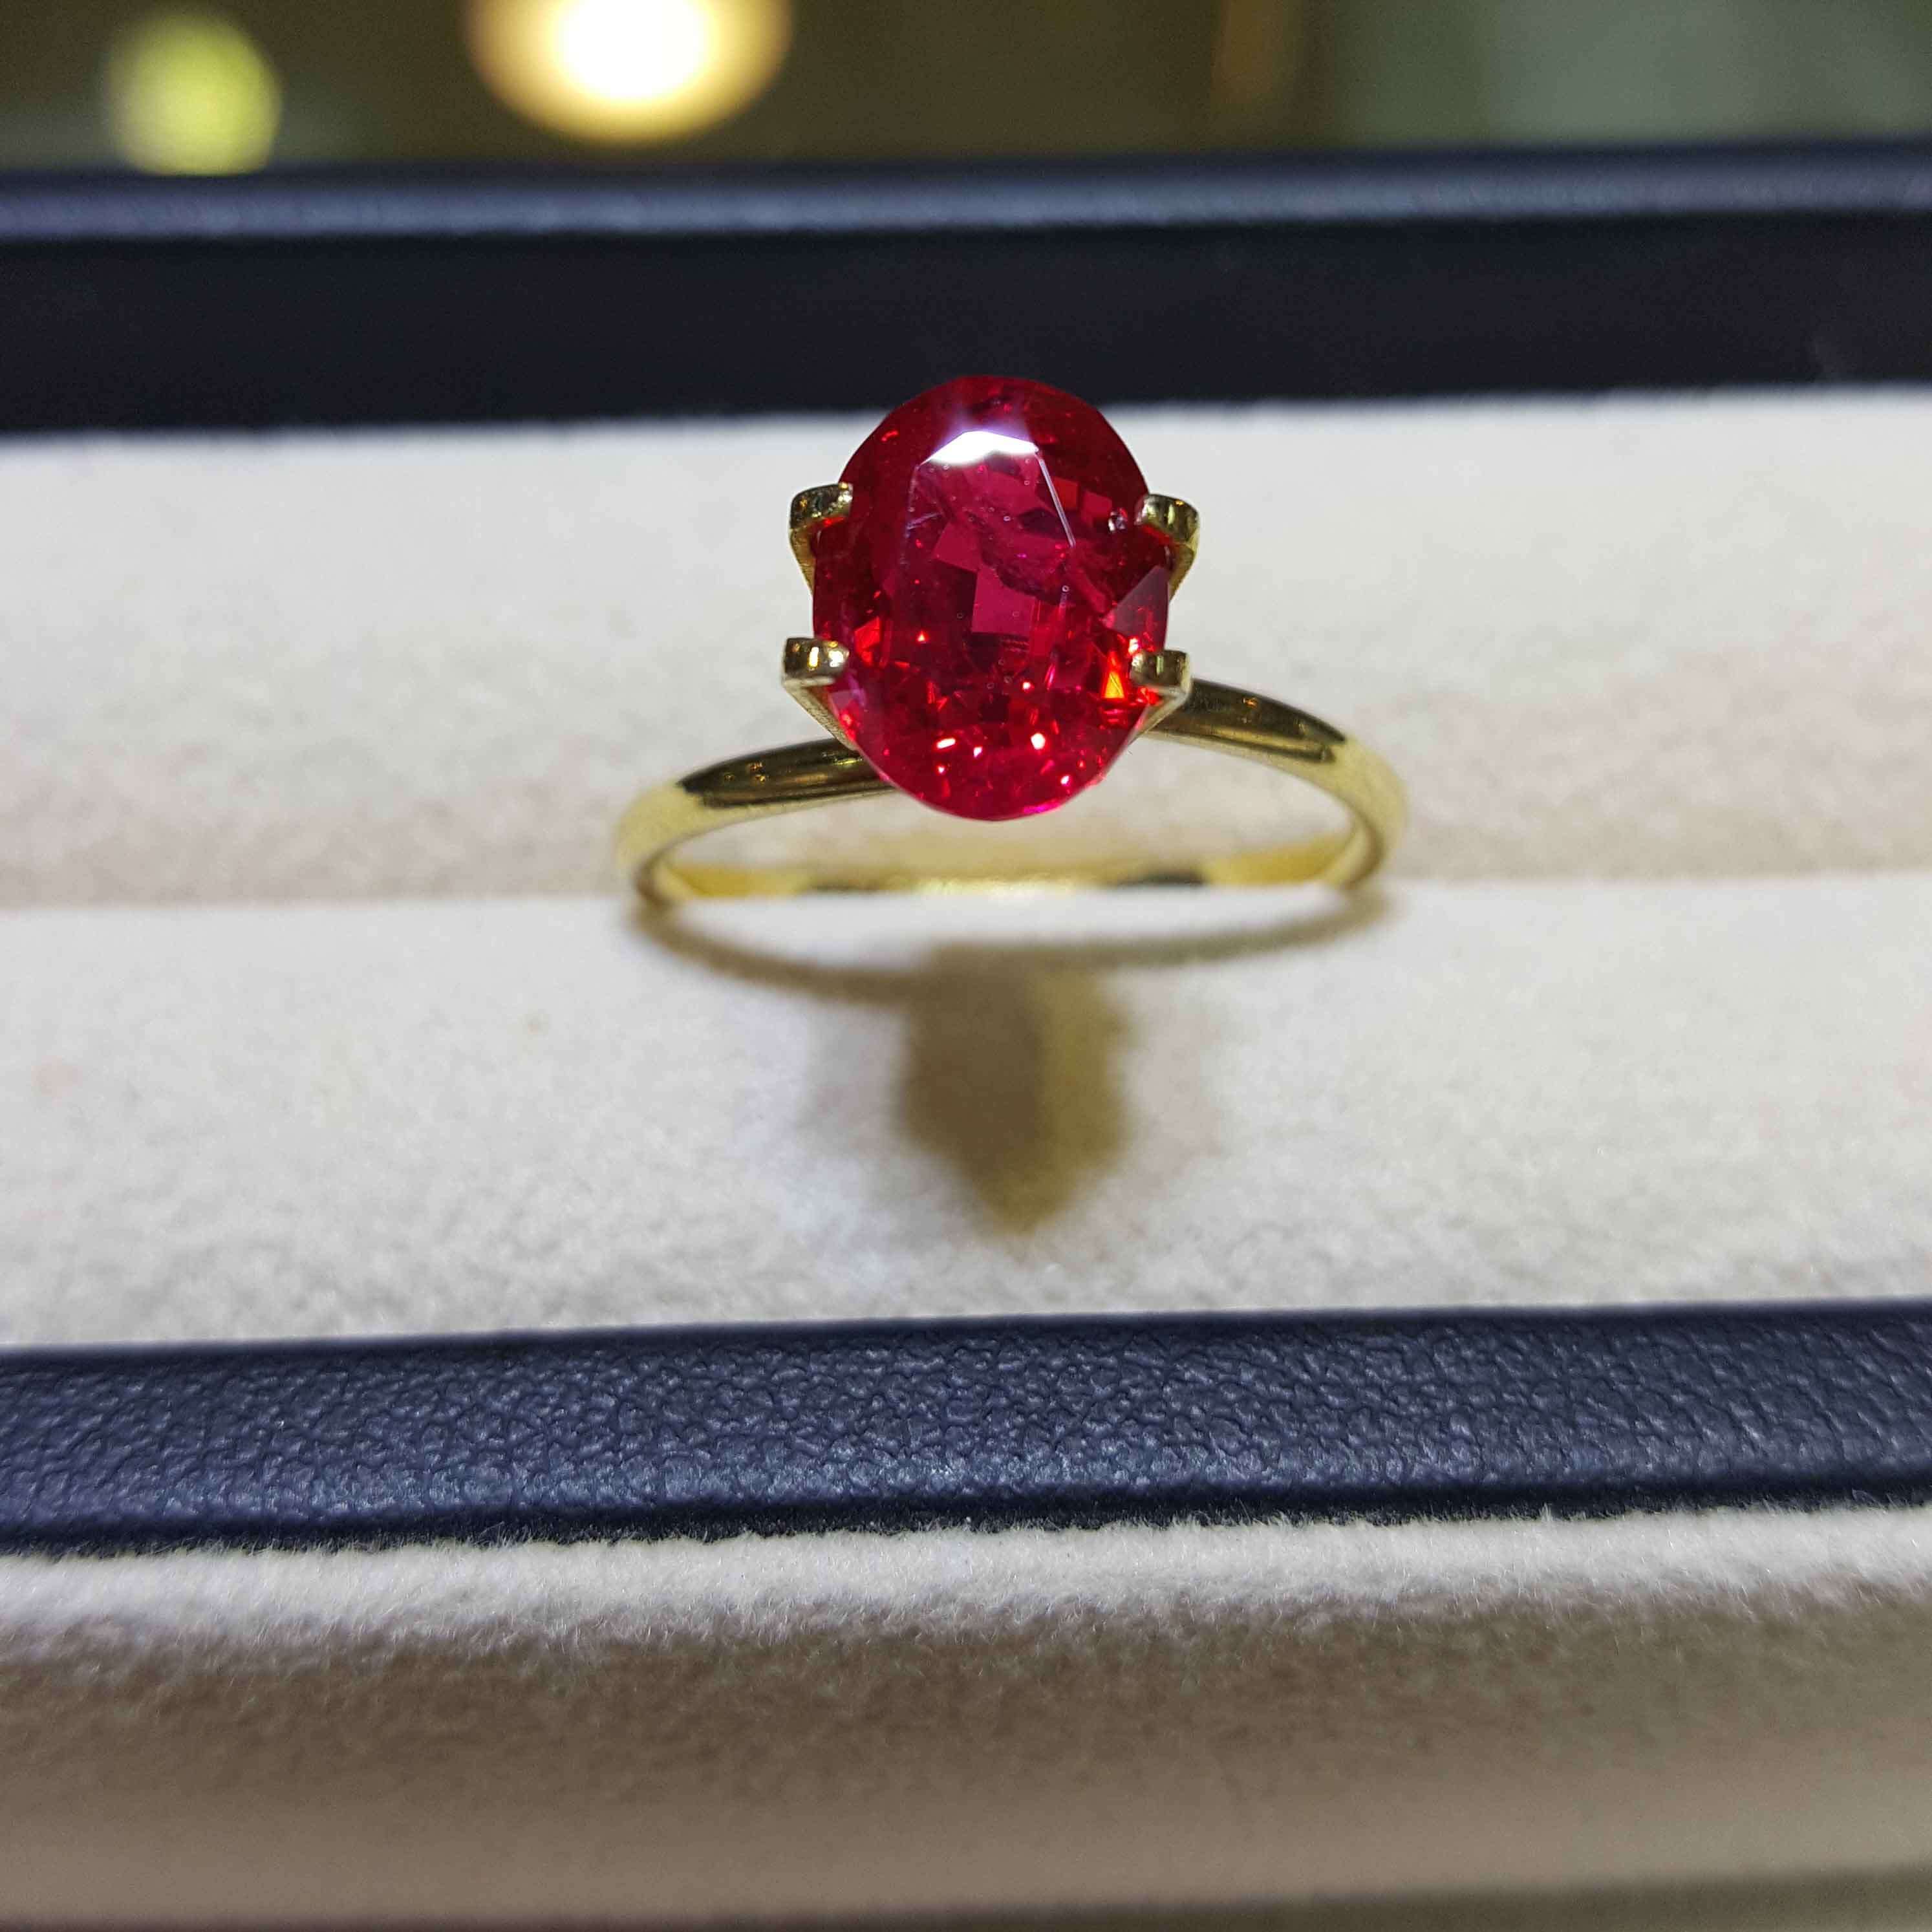 custom made wedding engagement ring with Rare Burma Ruby 3.53ct Local Singapore Jeweller